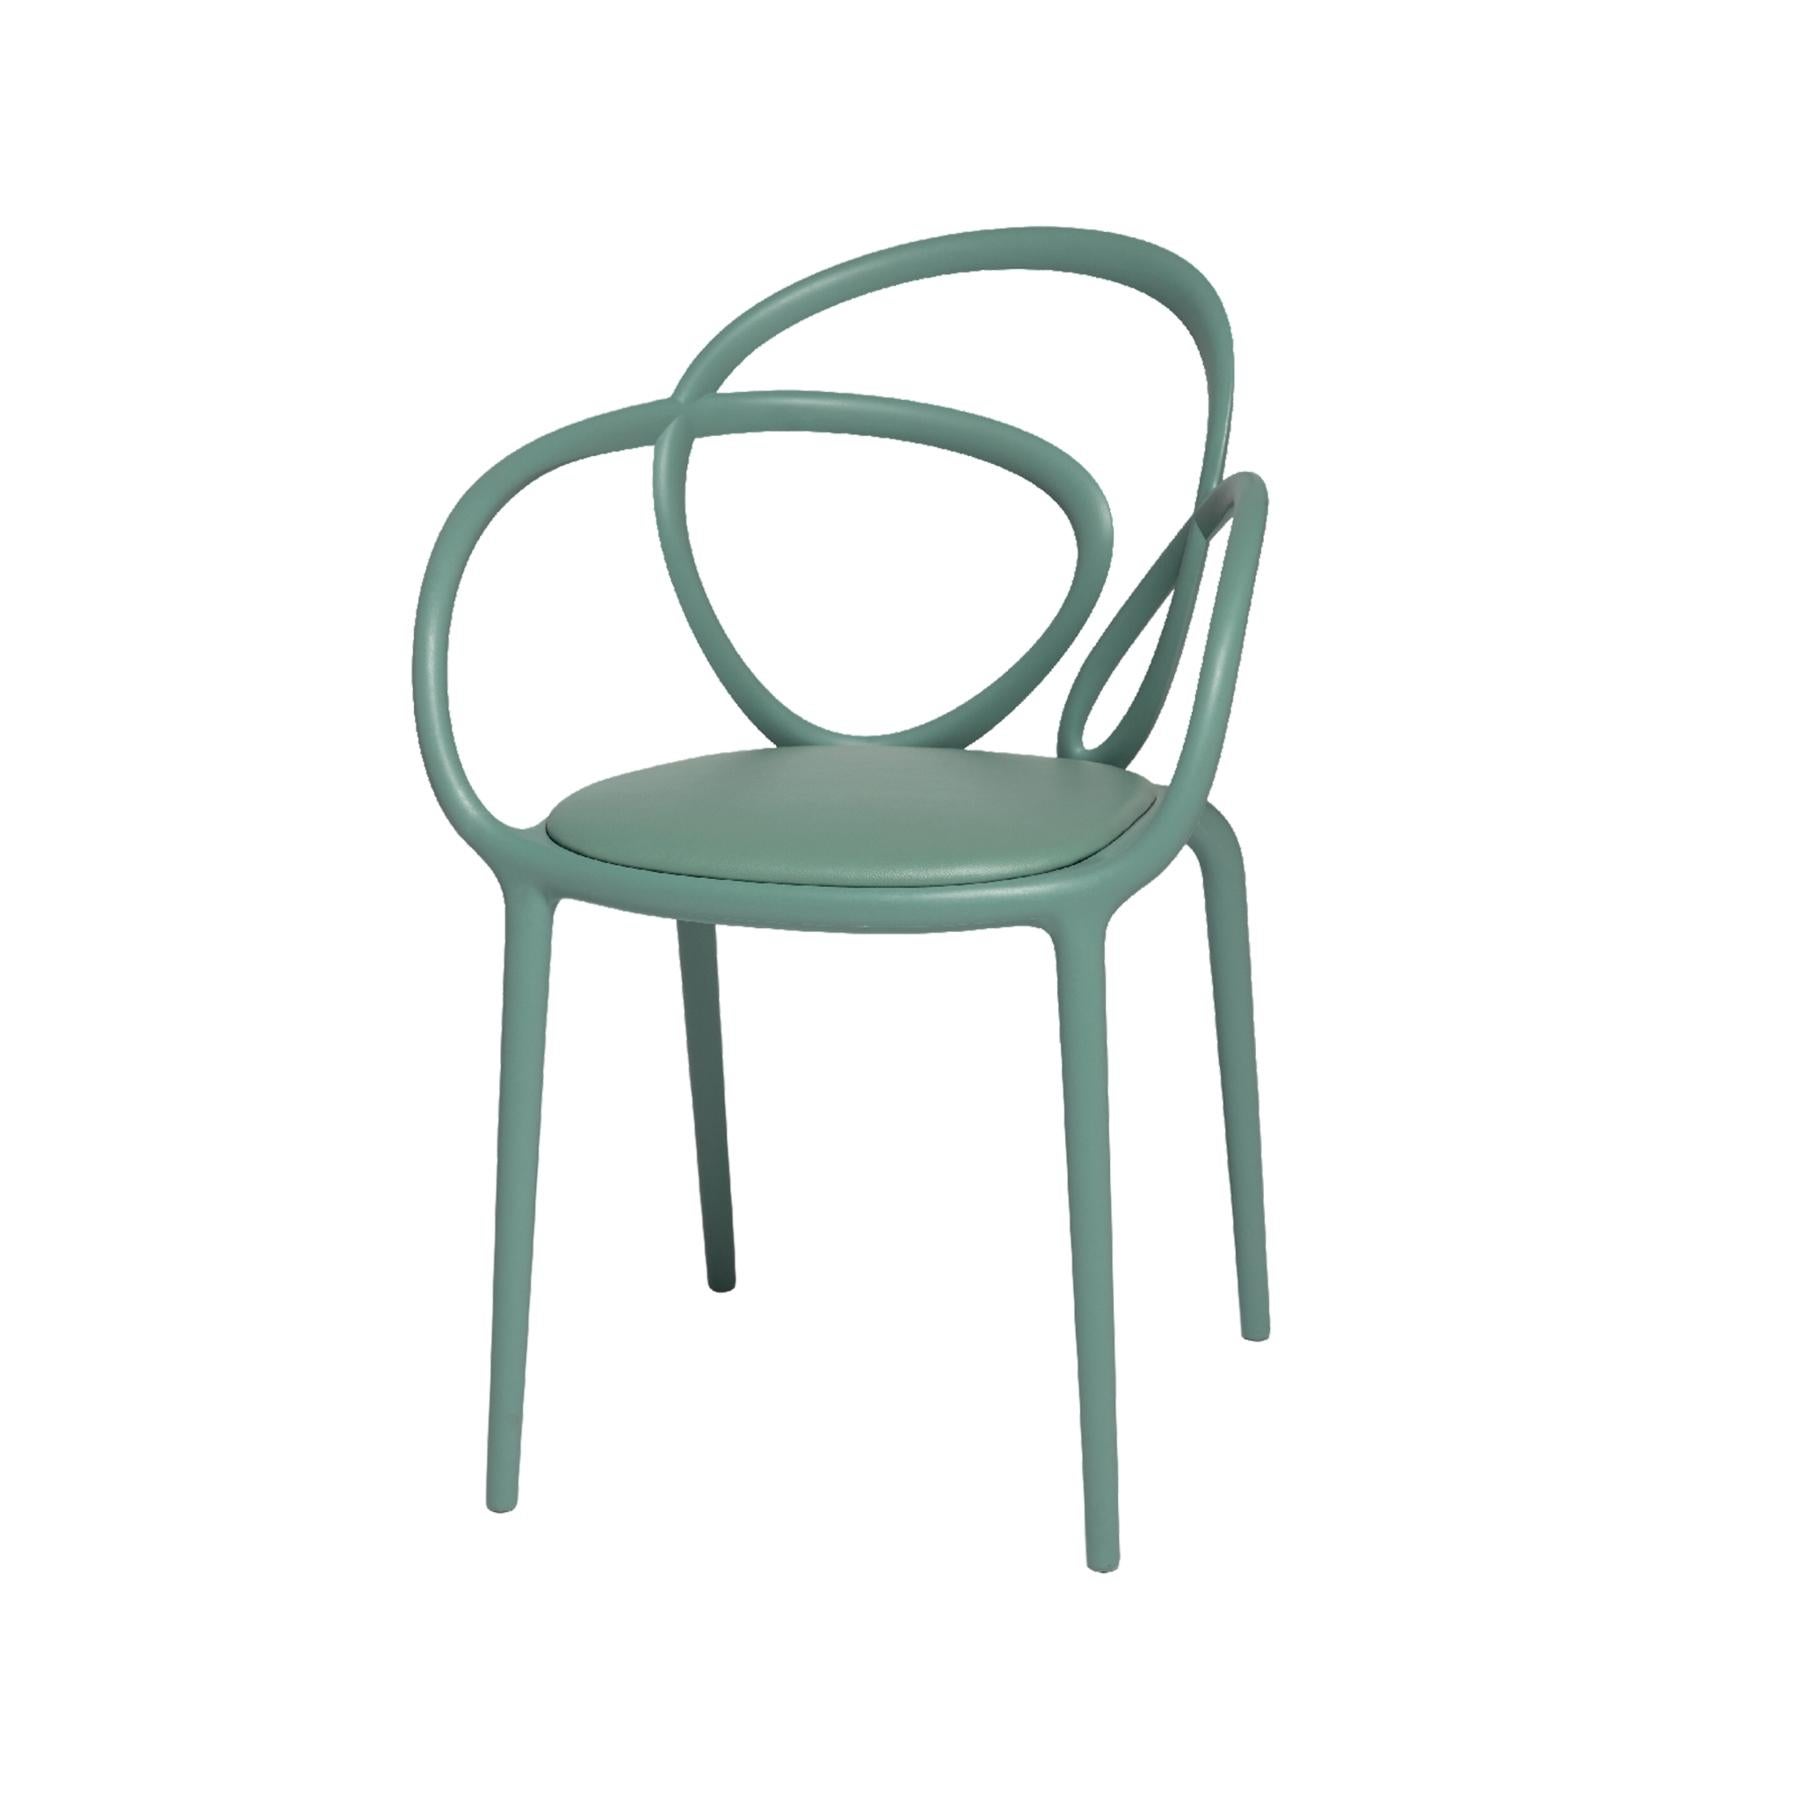 loop chair reproduction